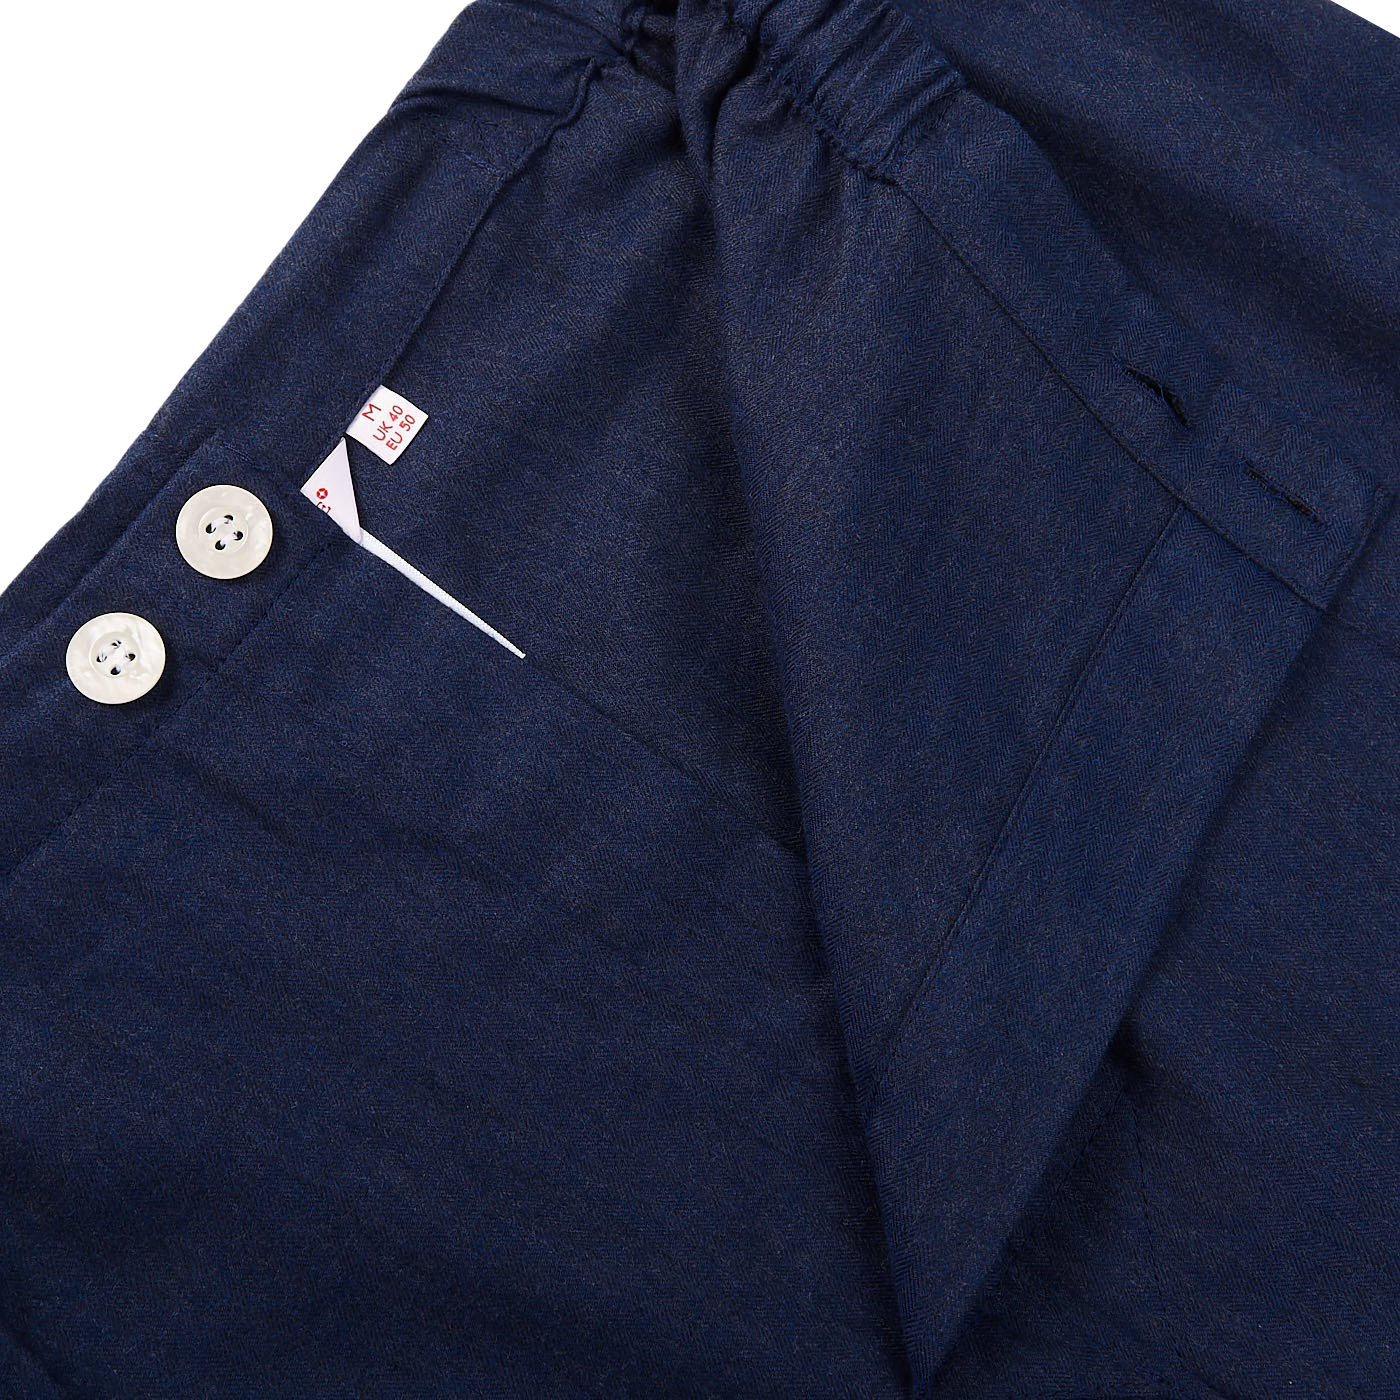 Derek Rose Blue Piped Cotton Classic Fit Pyjamas Zipper